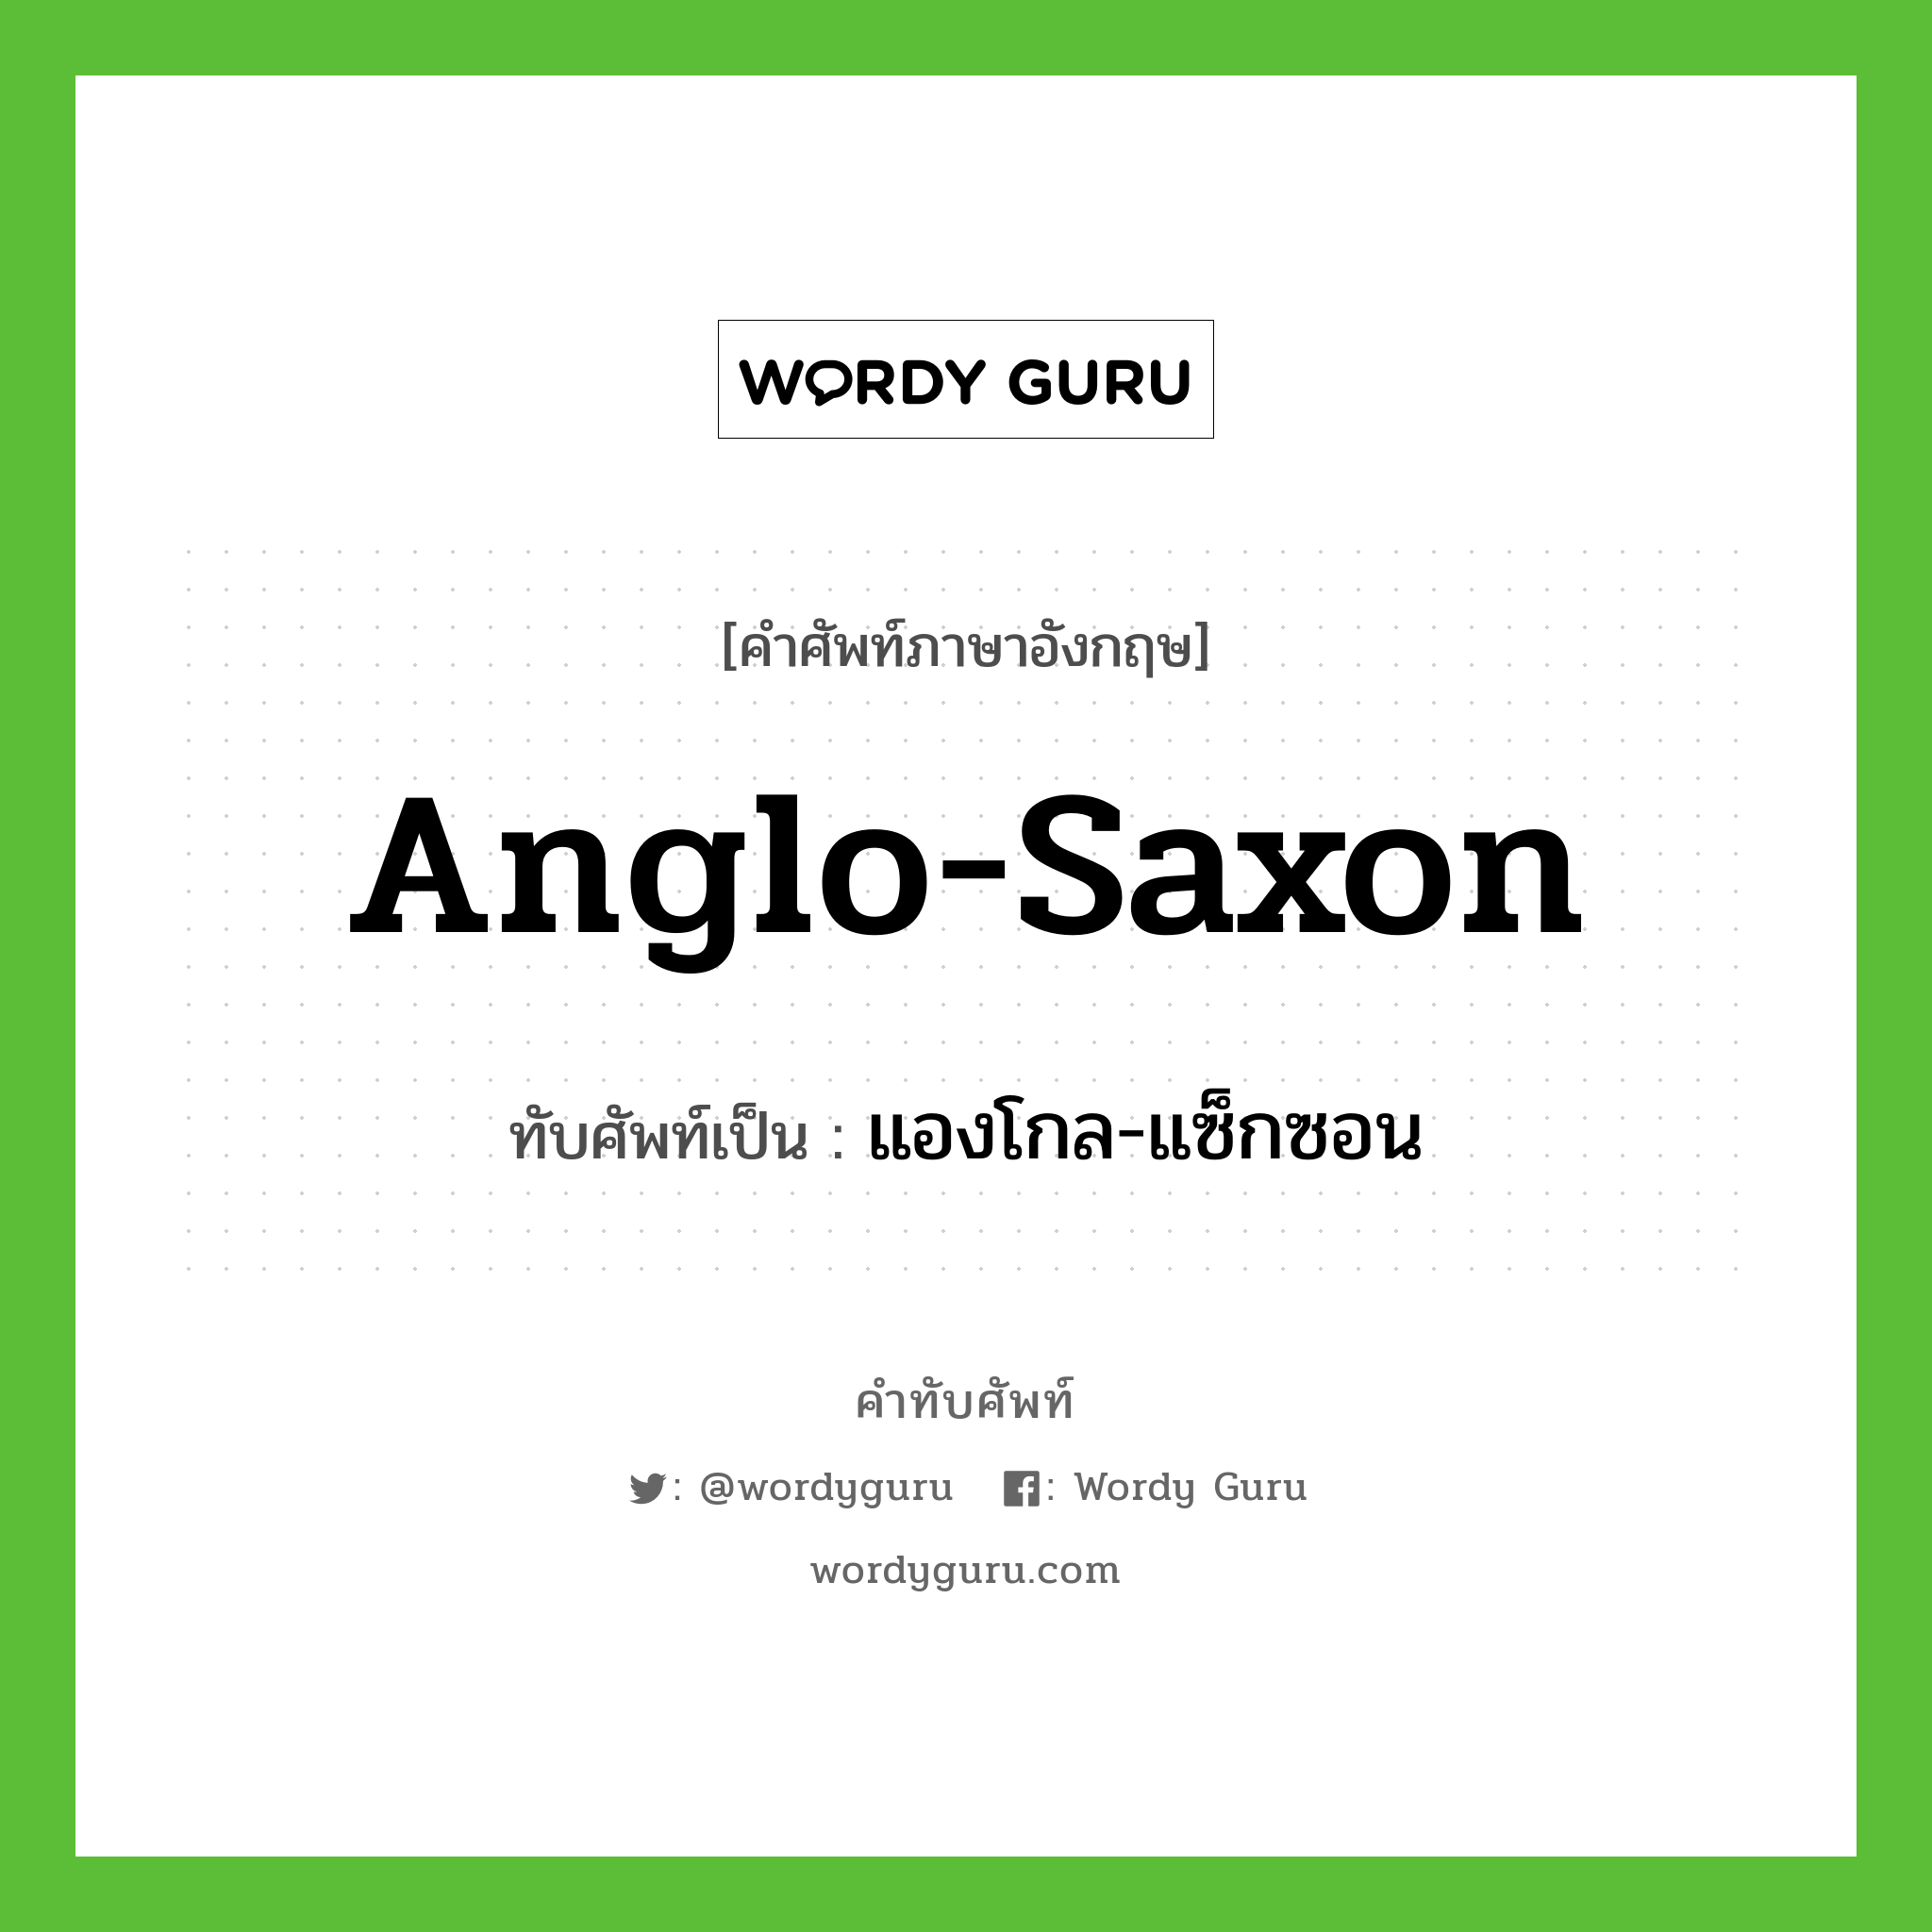 Anglo-Saxon เขียนเป็นคำไทยว่าอะไร?, คำศัพท์ภาษาอังกฤษ Anglo-Saxon ทับศัพท์เป็น แองโกล-แซ็กซอน